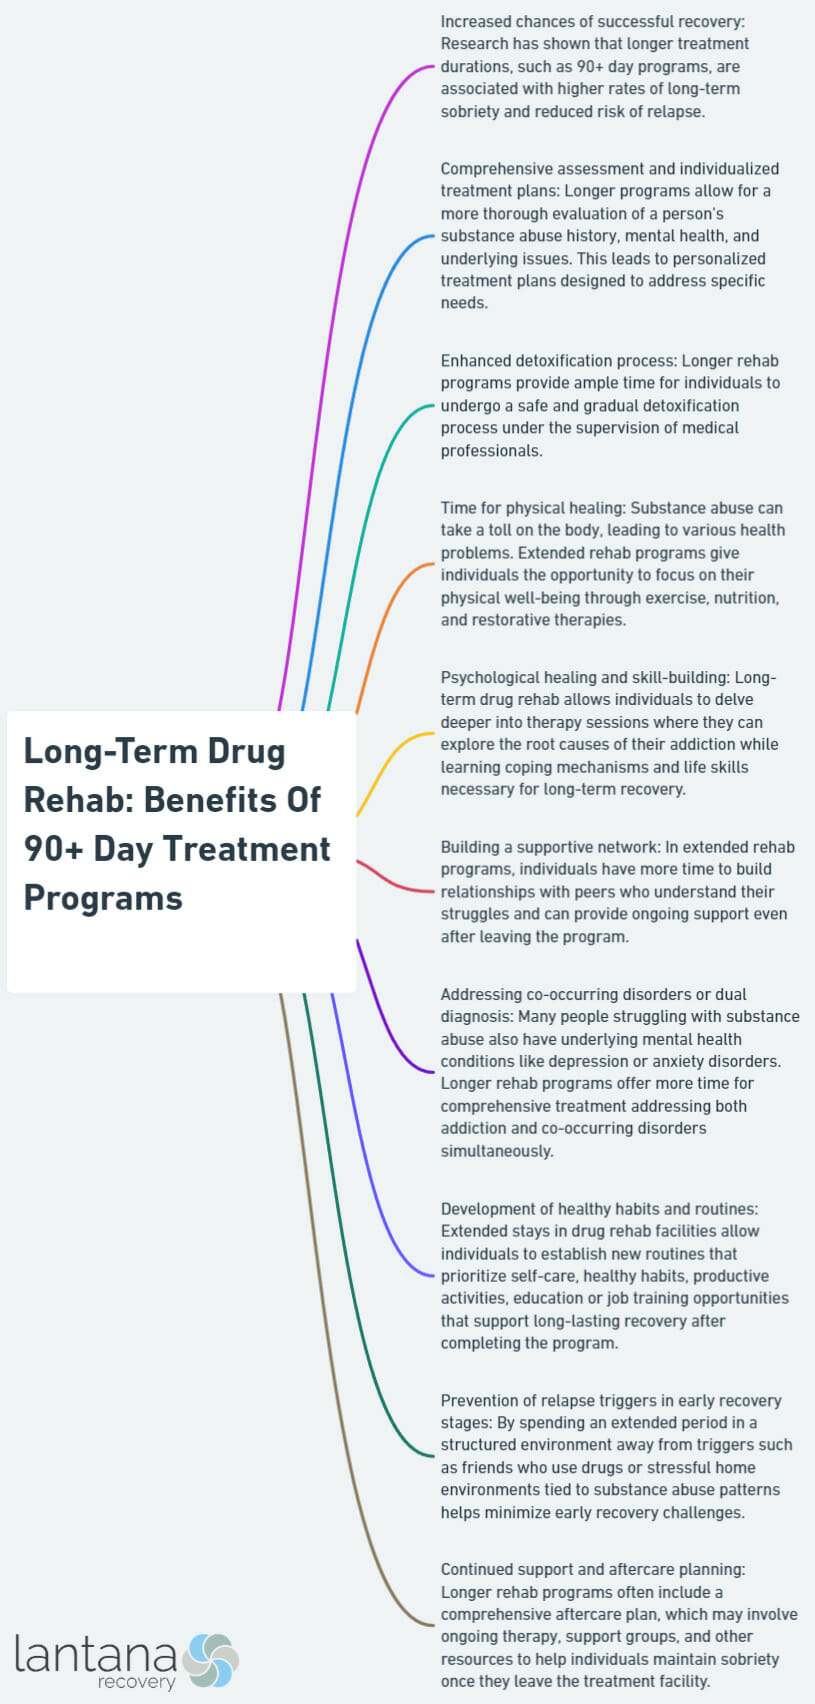 Long-Term Drug Rehab: Benefits Of 90+ Day Treatment Programs
